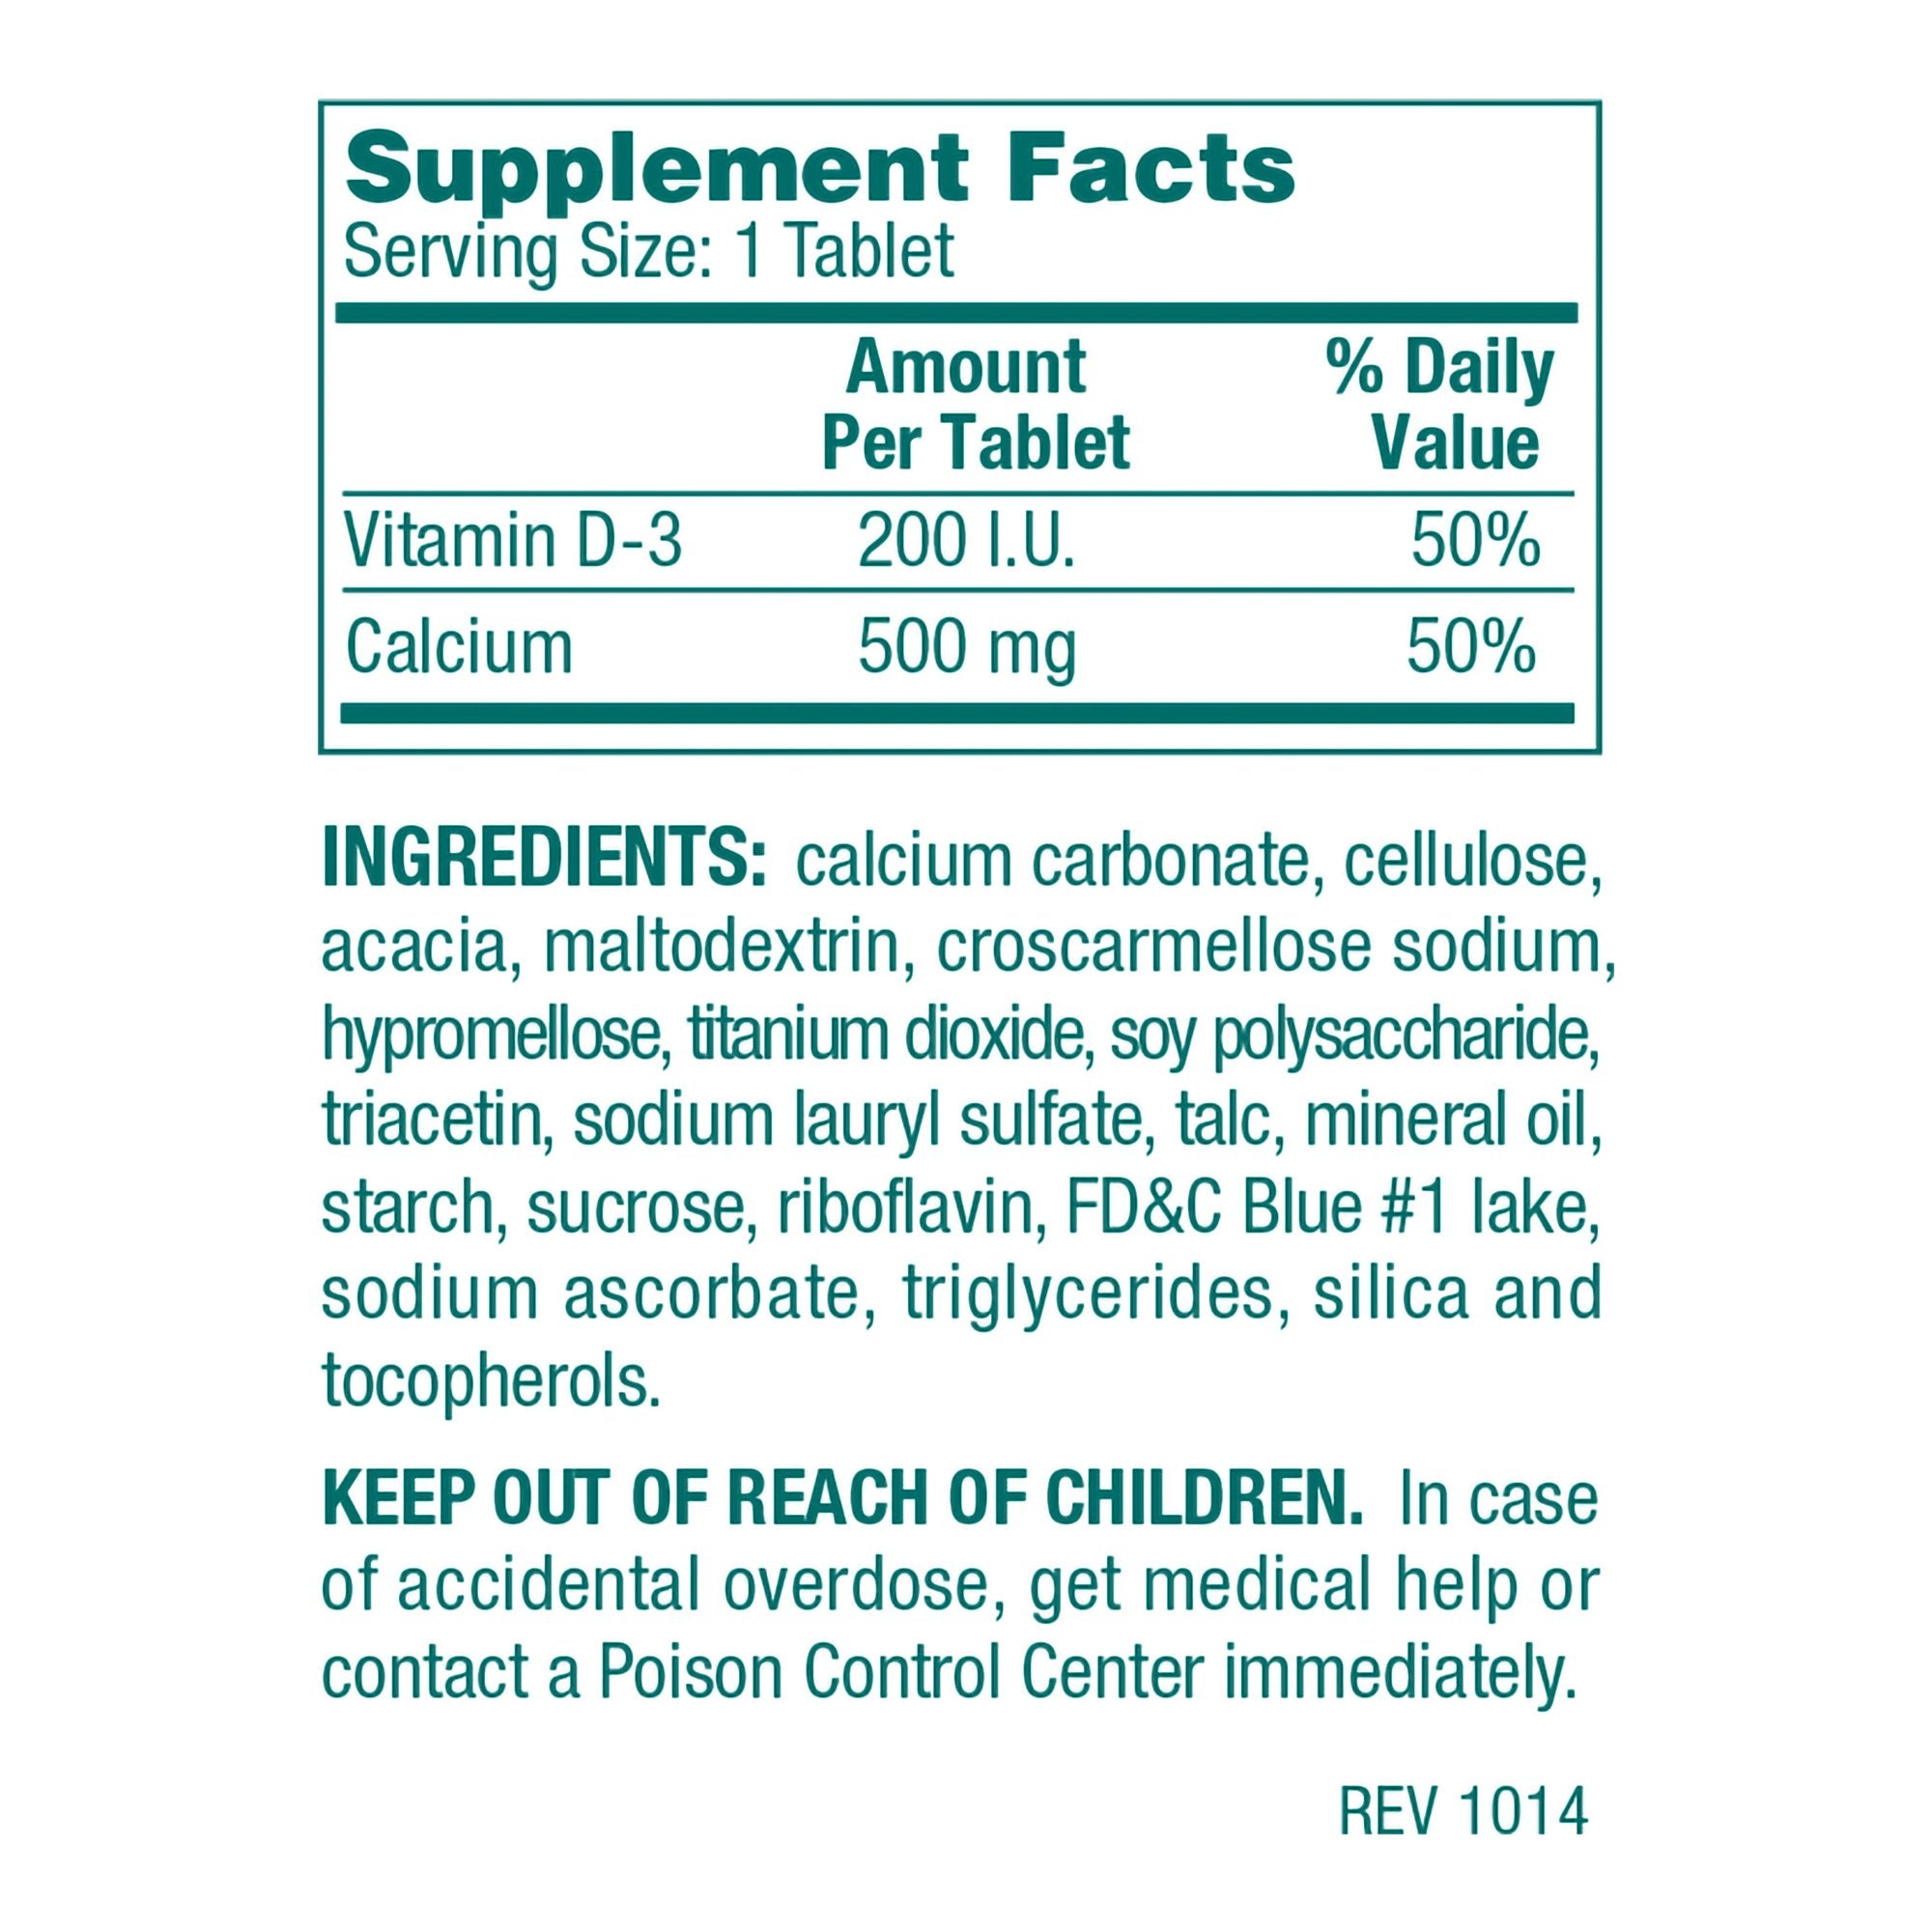 Joint Health Supplement Geri-Care Calcium / Vitamin D 500 mg - 200 IU Strength Tablet 1,000 per Bottle